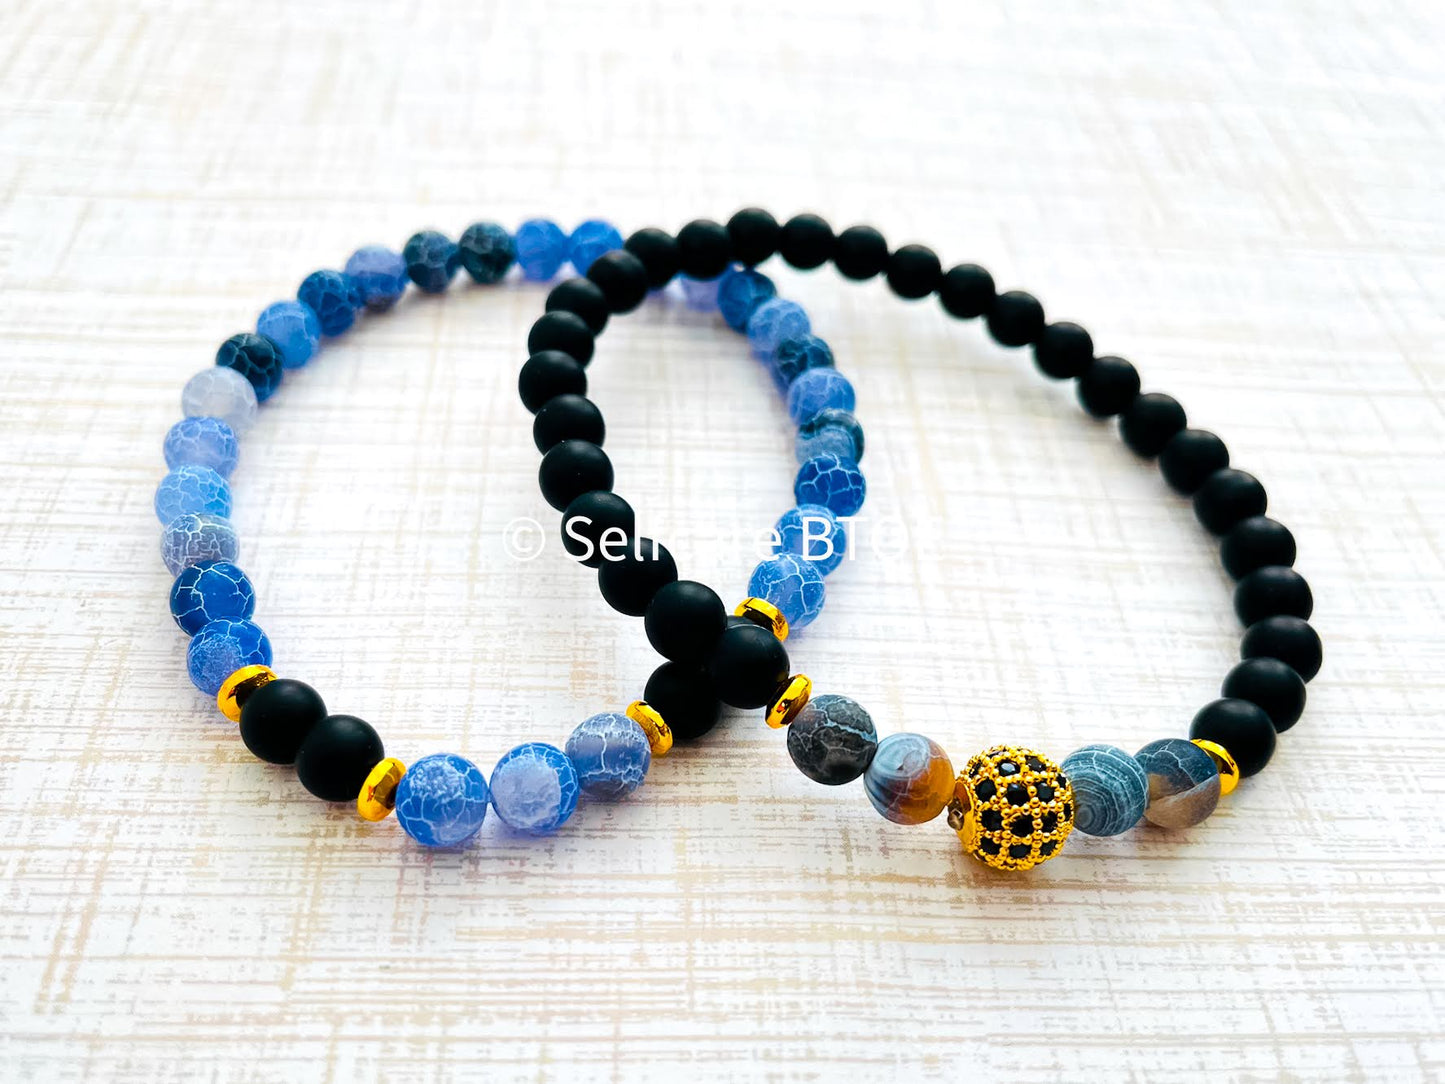 Onyx and Dark Blue Weathered Agate Stones Bracelet | 4mm